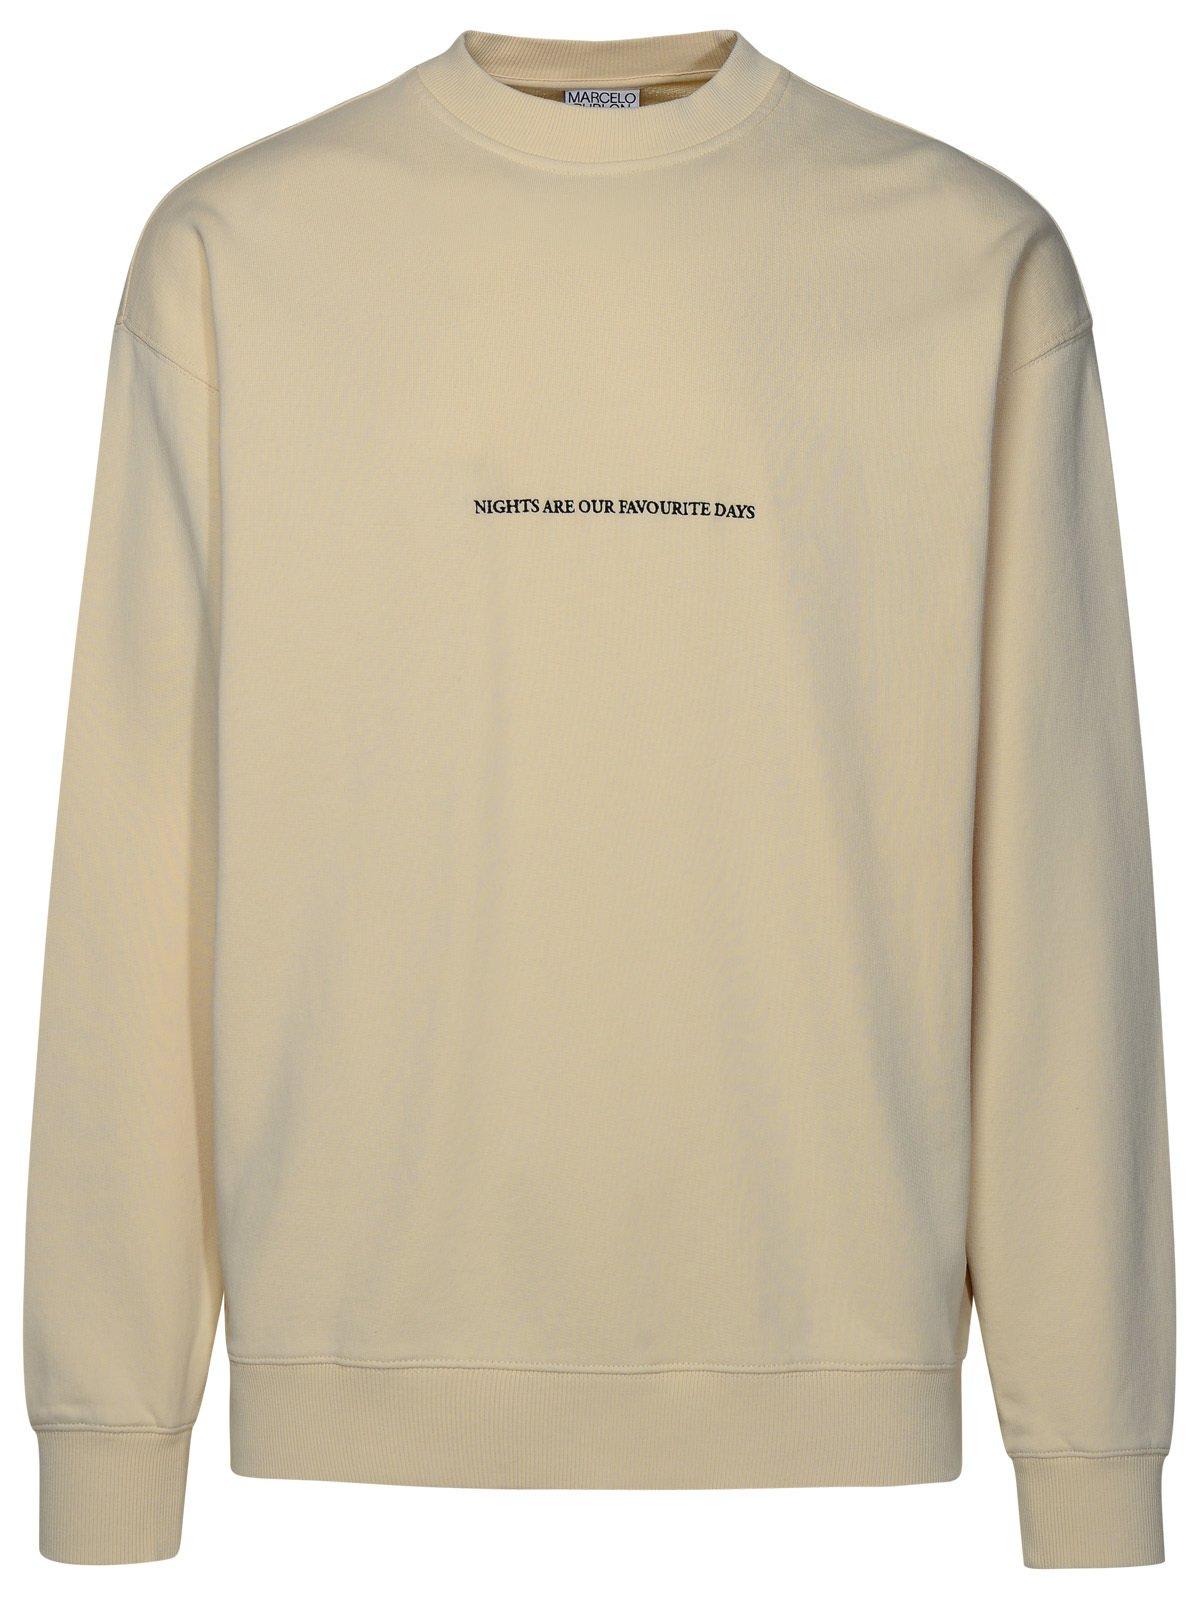 Quote-printed Crewneck Sweatshirt